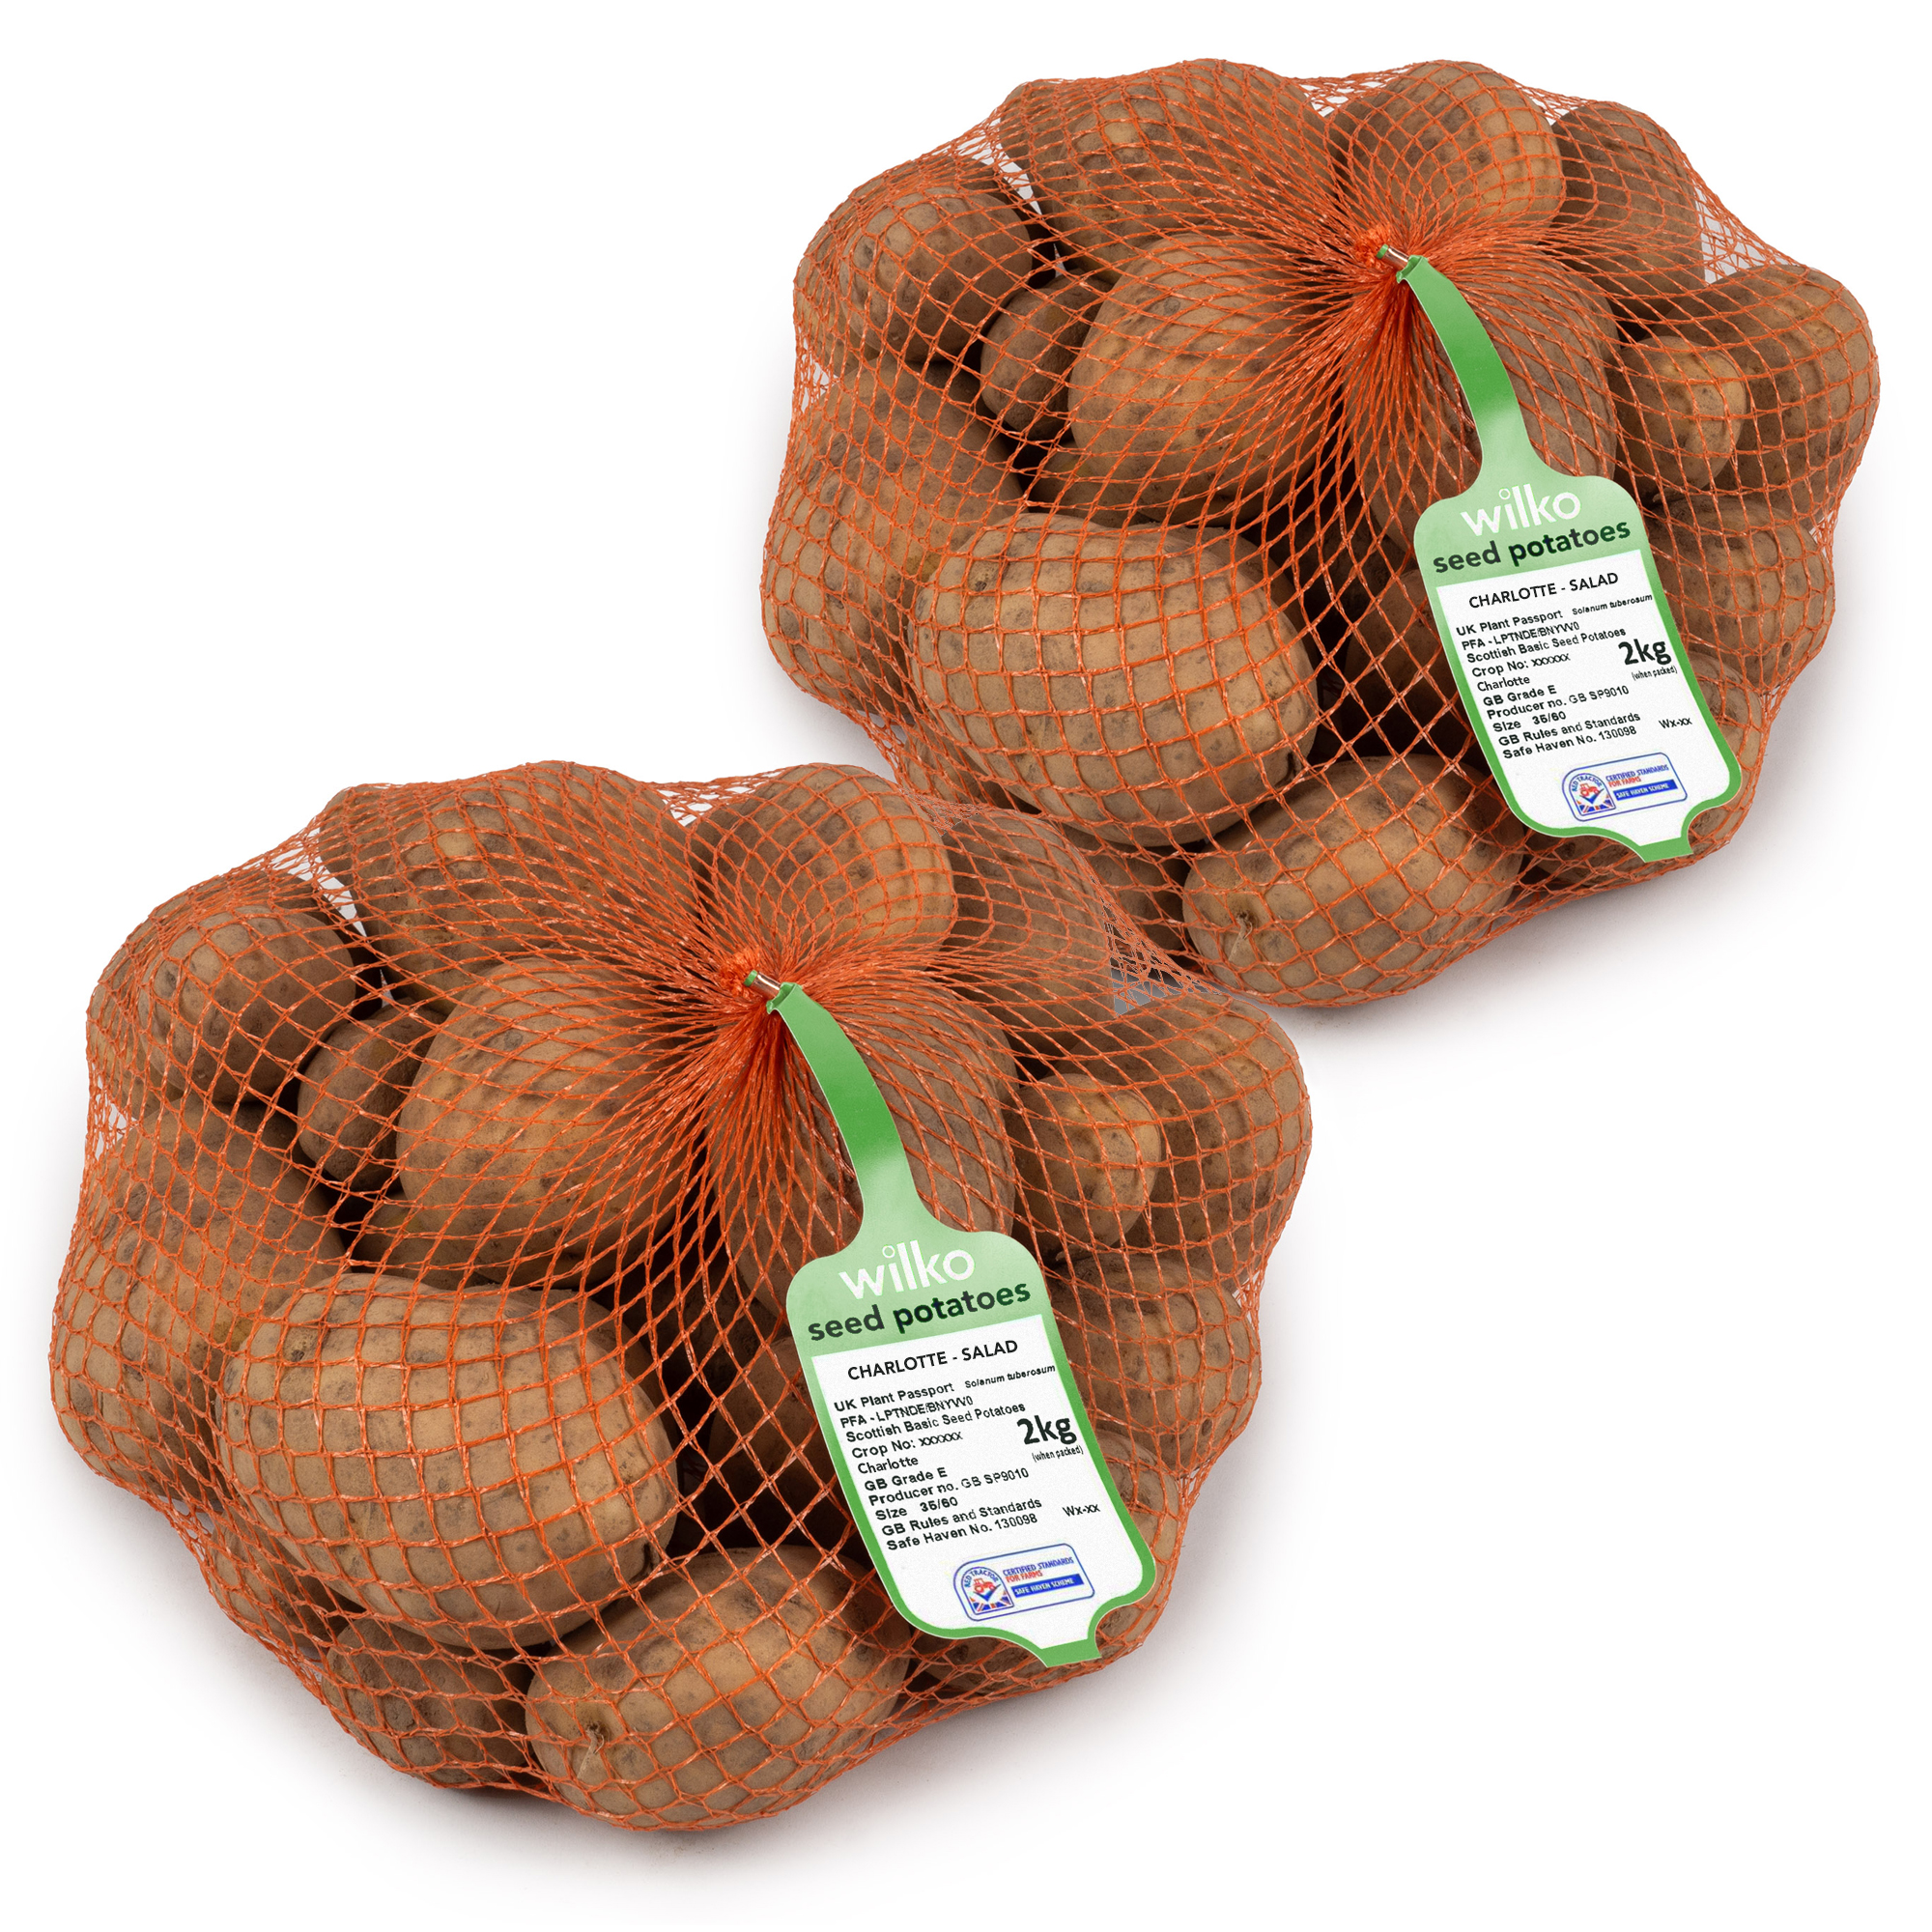 Wilko Charlotte Seed Potatoes 4kg Image 2